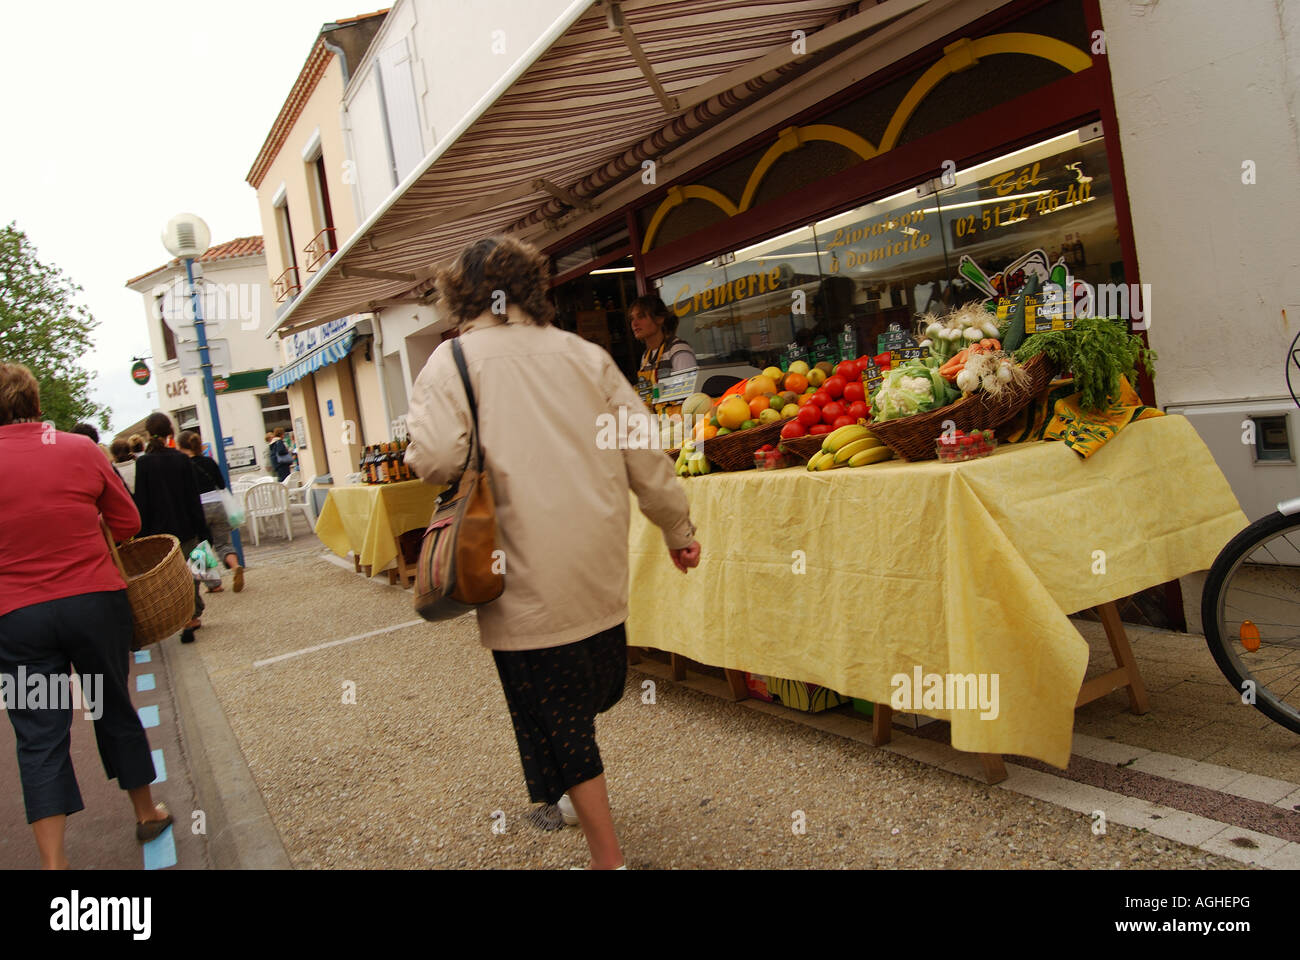 fruit and vegetables market stall in Bretignolles sur mer, vendee, france number 2540 Stock Photo